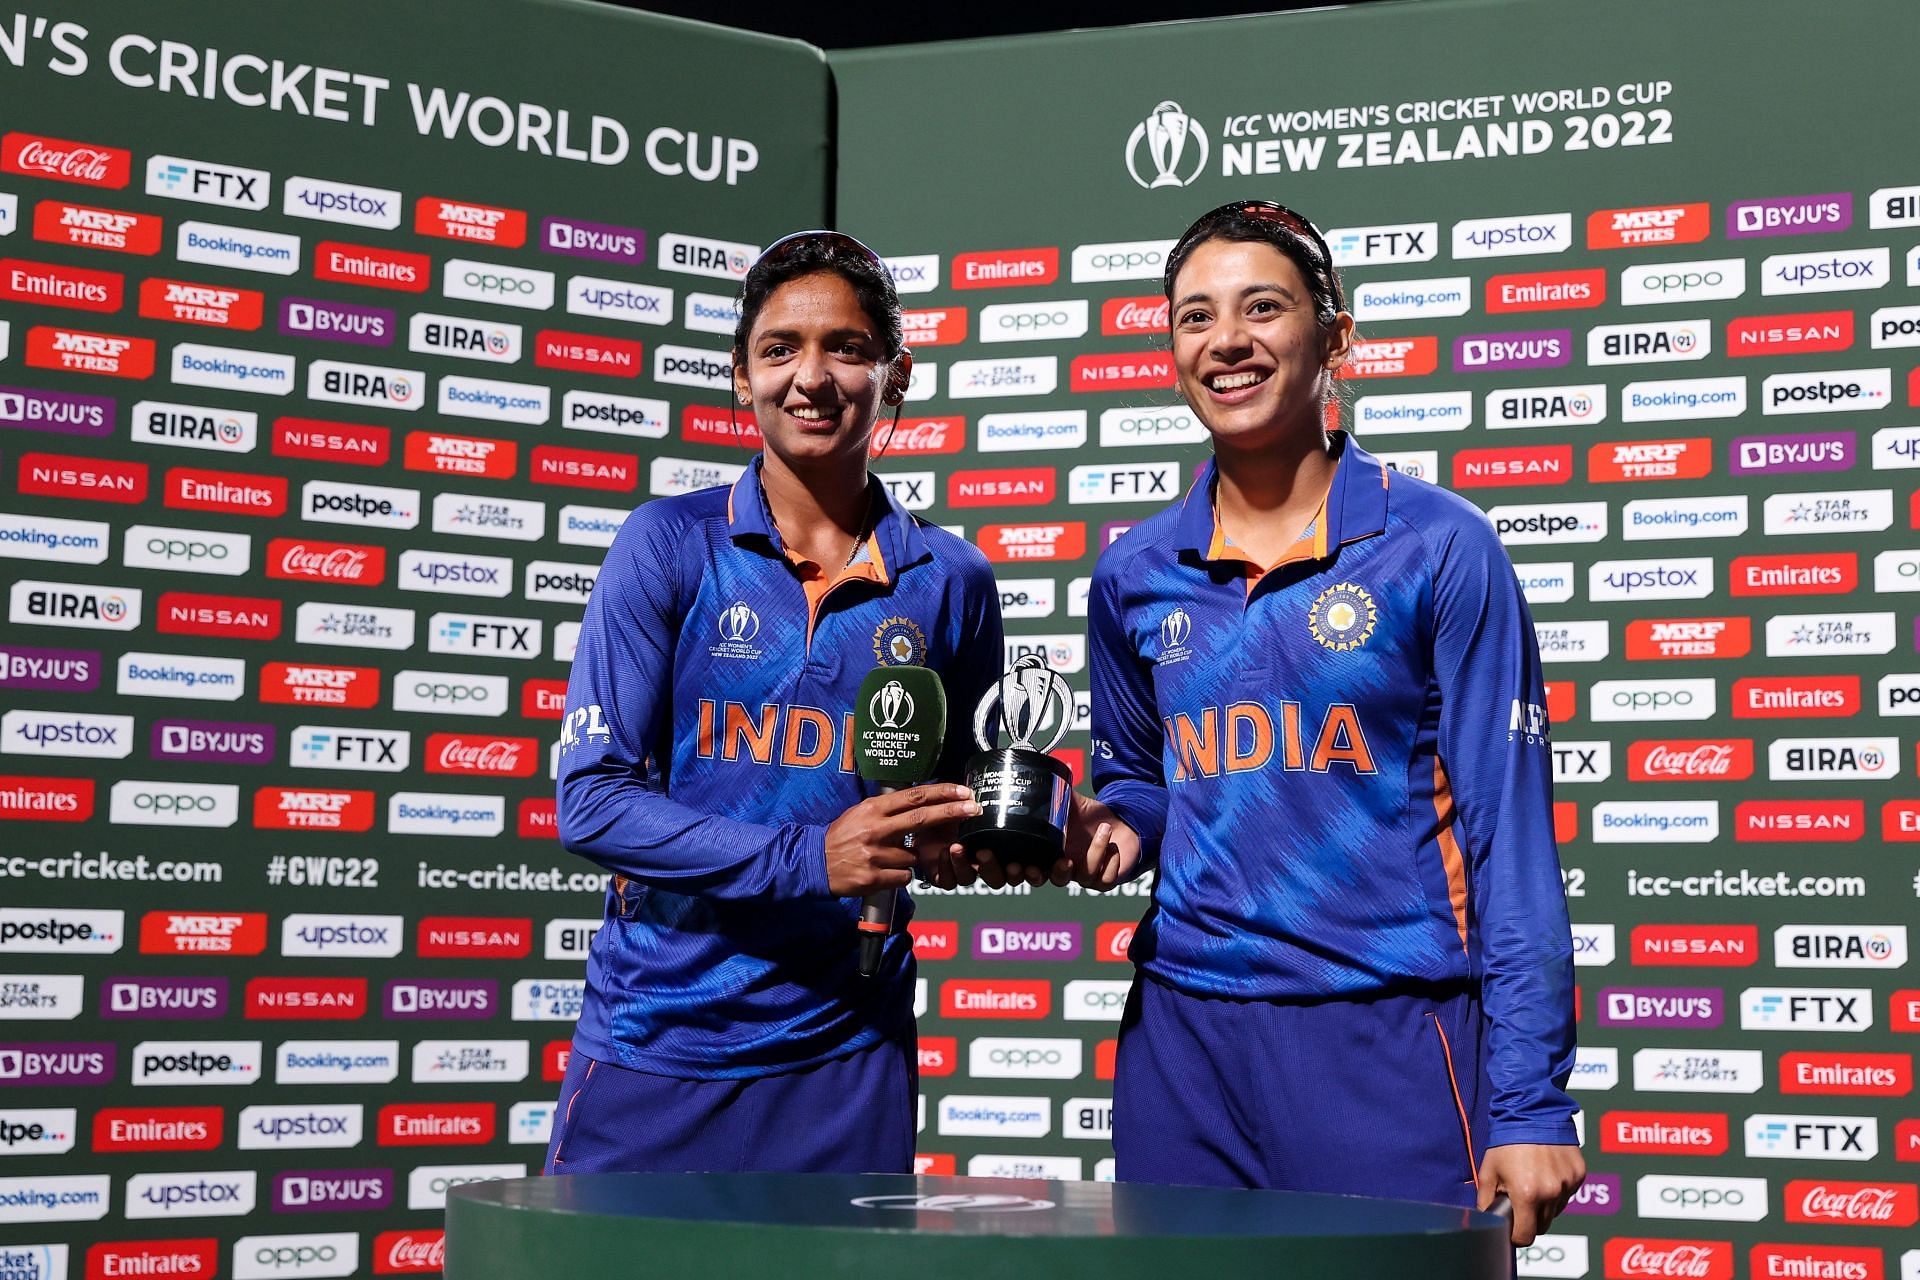 Smriti Mandhana (right) shares her Man of the Match award with Harmanpreet Kaur (Credit: Twitter/BCCI Women)